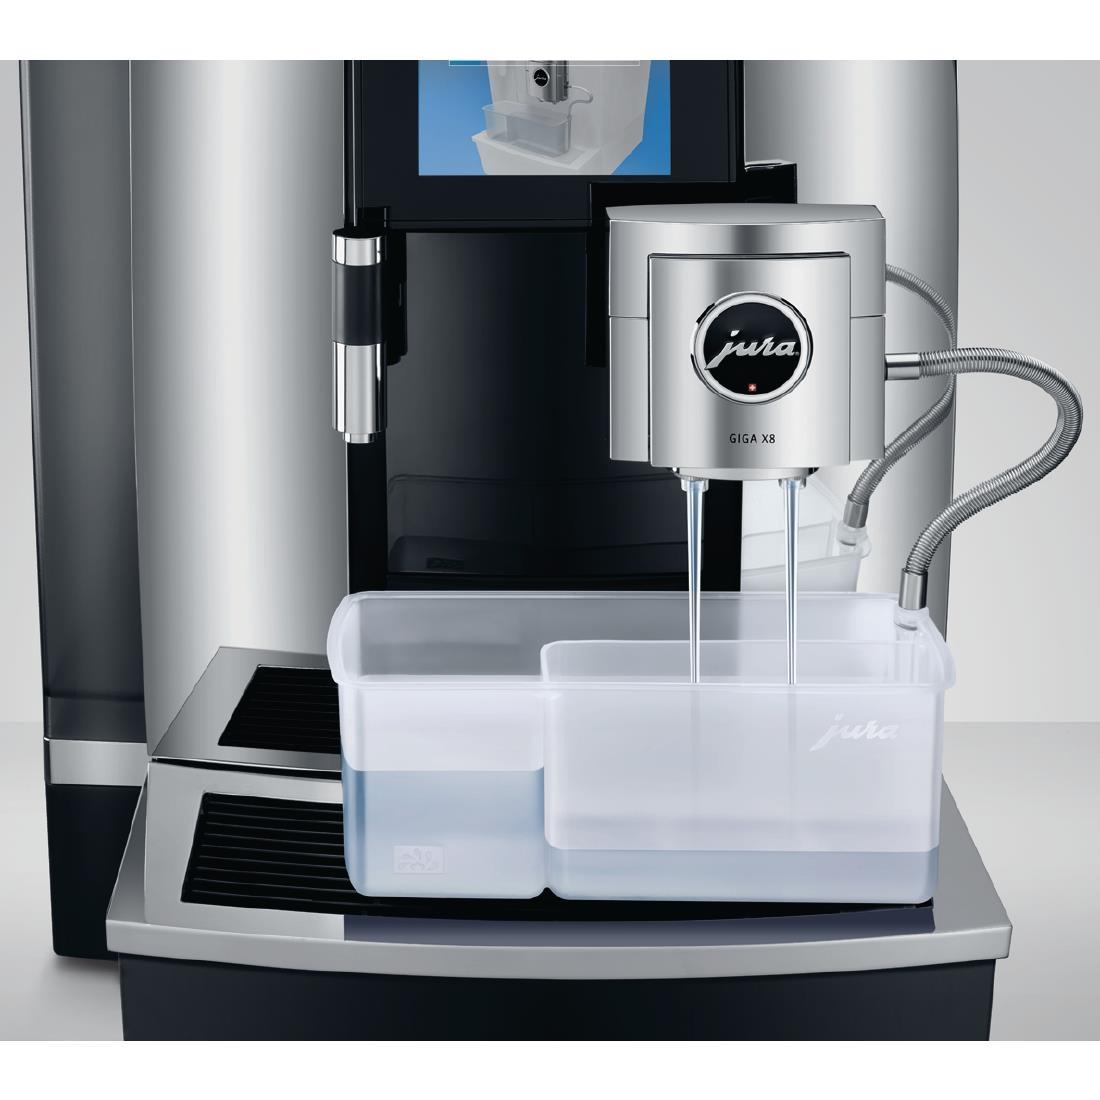 Jura Giga X8 Manual Fill Bean to Cup Coffee Machine Black - FB458  - 13